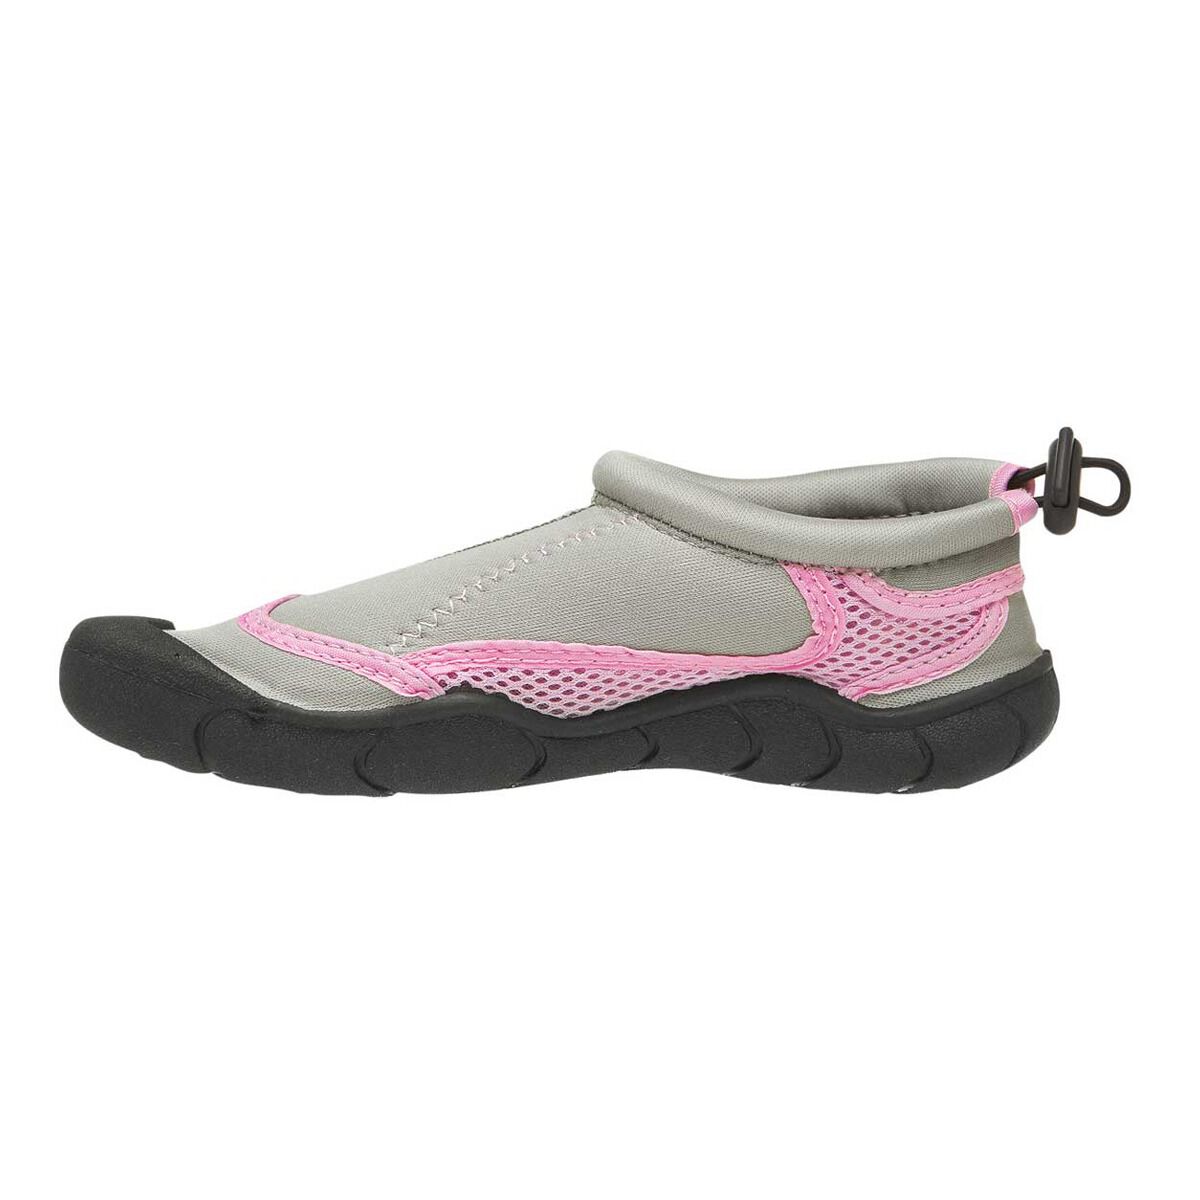 Tahwalhi Aqua Junior Shoe Pink US 9 